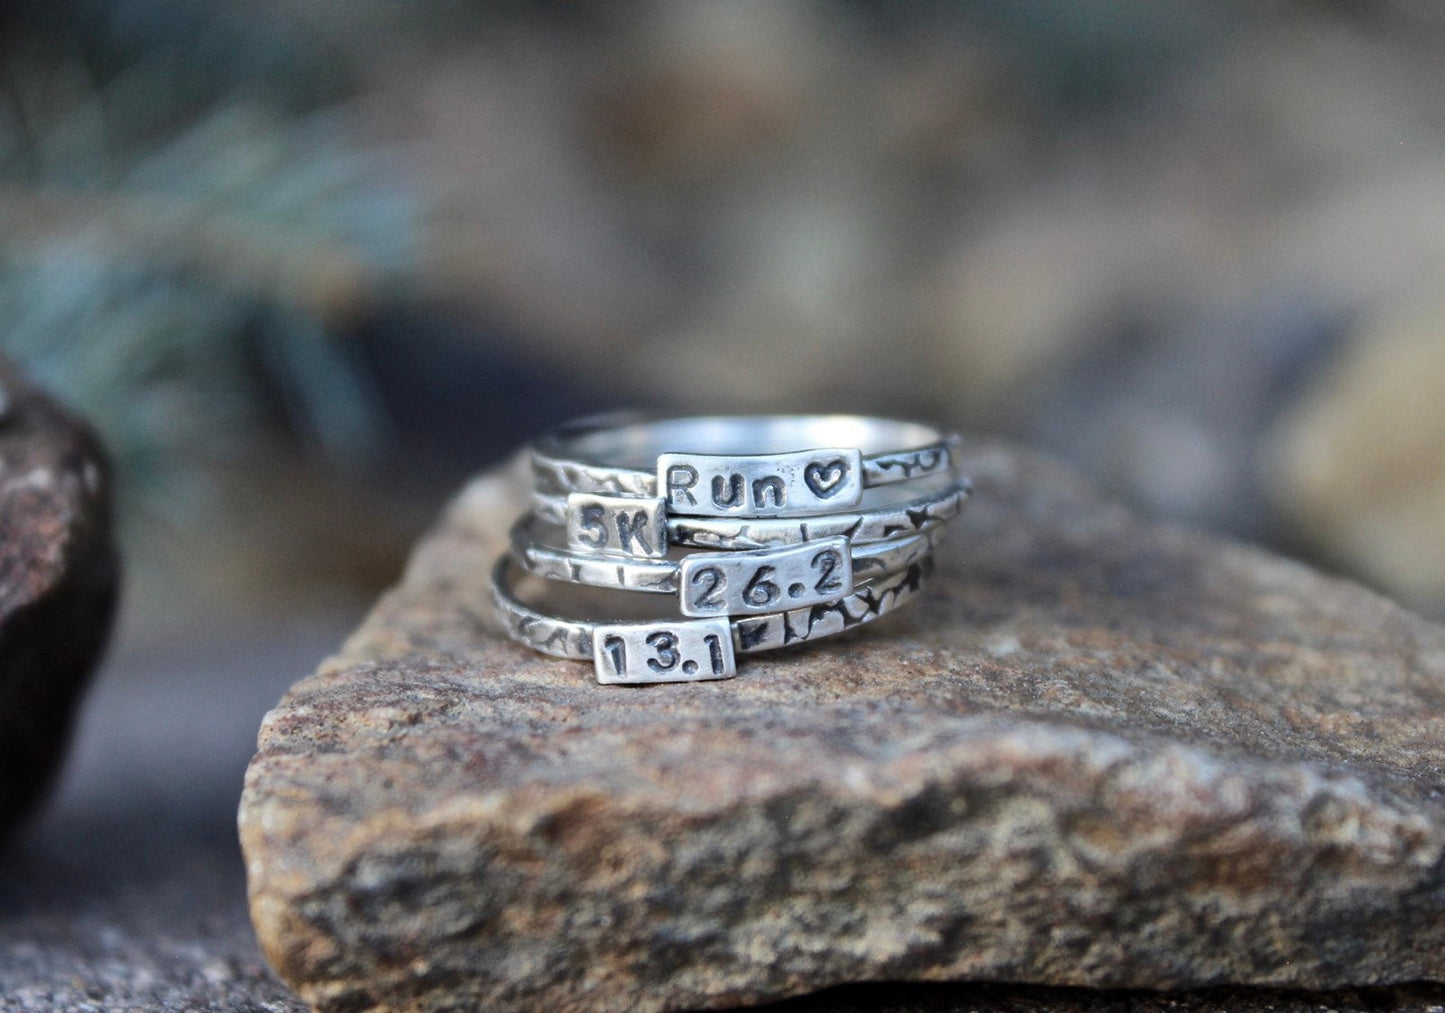 Runner Ring, Rings for Runners, Solid sterling silver stackable Runner's Rings, Running Rings, Run Love Ring, half marathon ring, minimalist